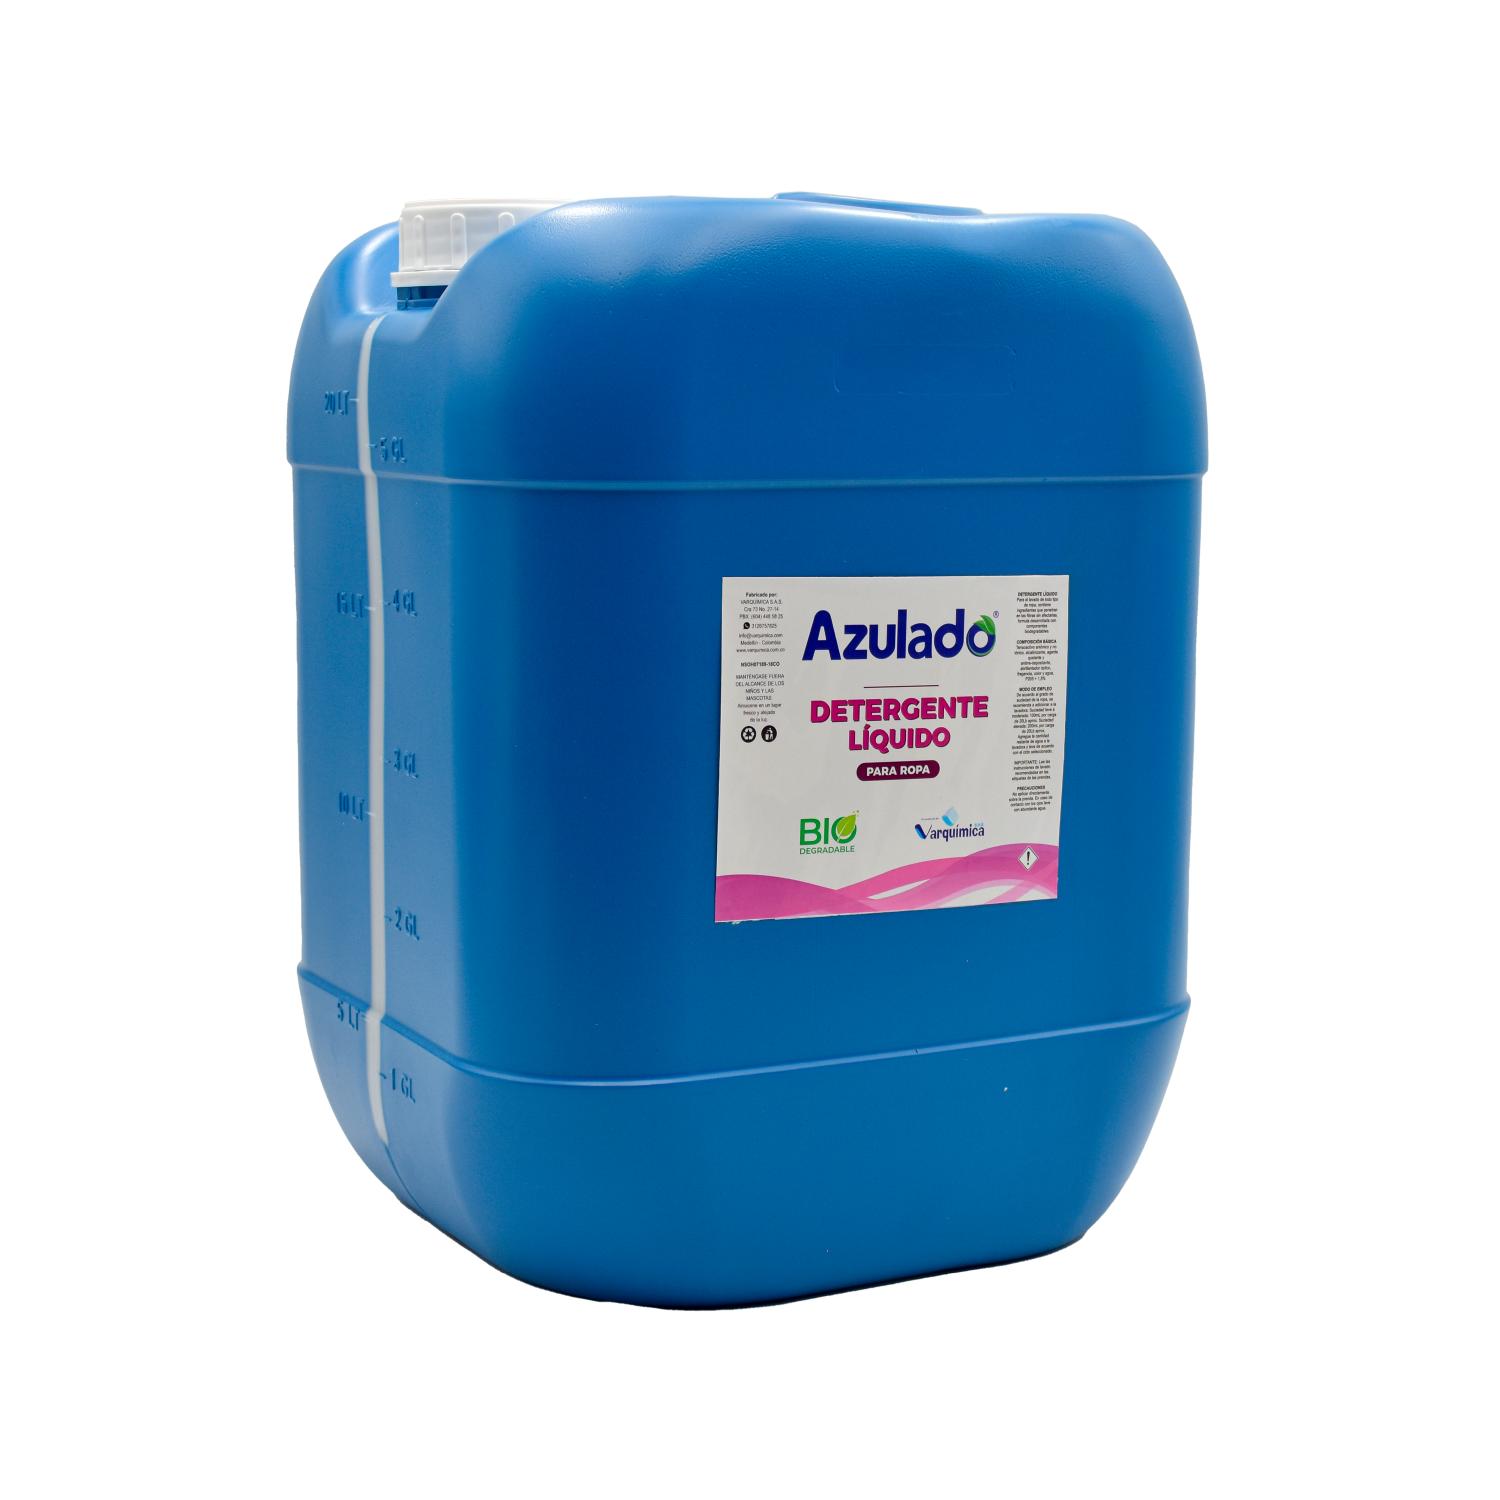 Detergente Liq Ropa X Cuñete Blue Azulado(19Lts)